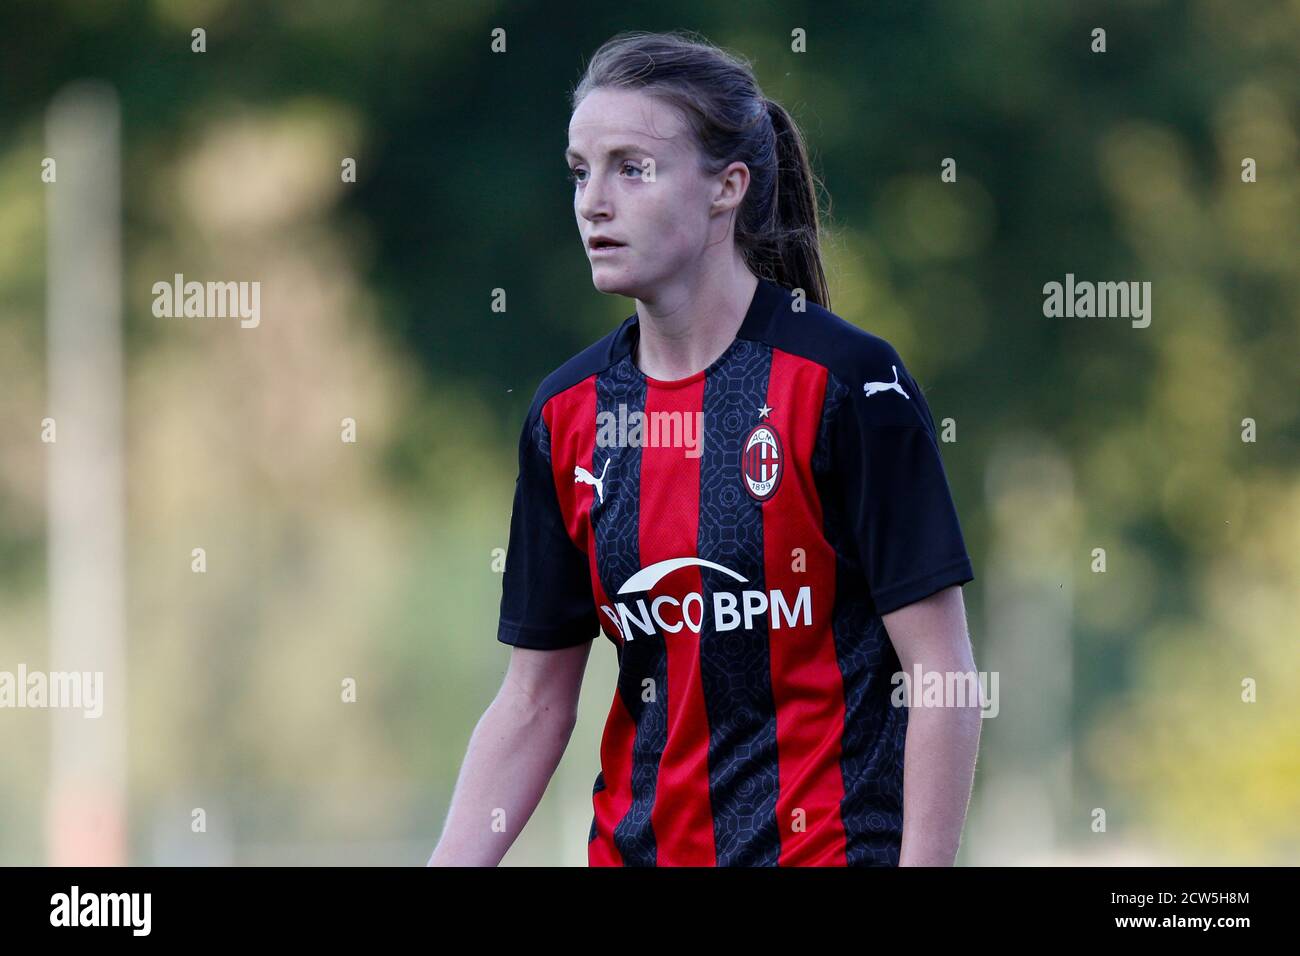 Christy Grimshaw (AC Milan) during AC Milan vs Pink Bari, Italian Soccer Serie A Women Championship, Milan, Italy, 05 Sep 2020 Stock Photo